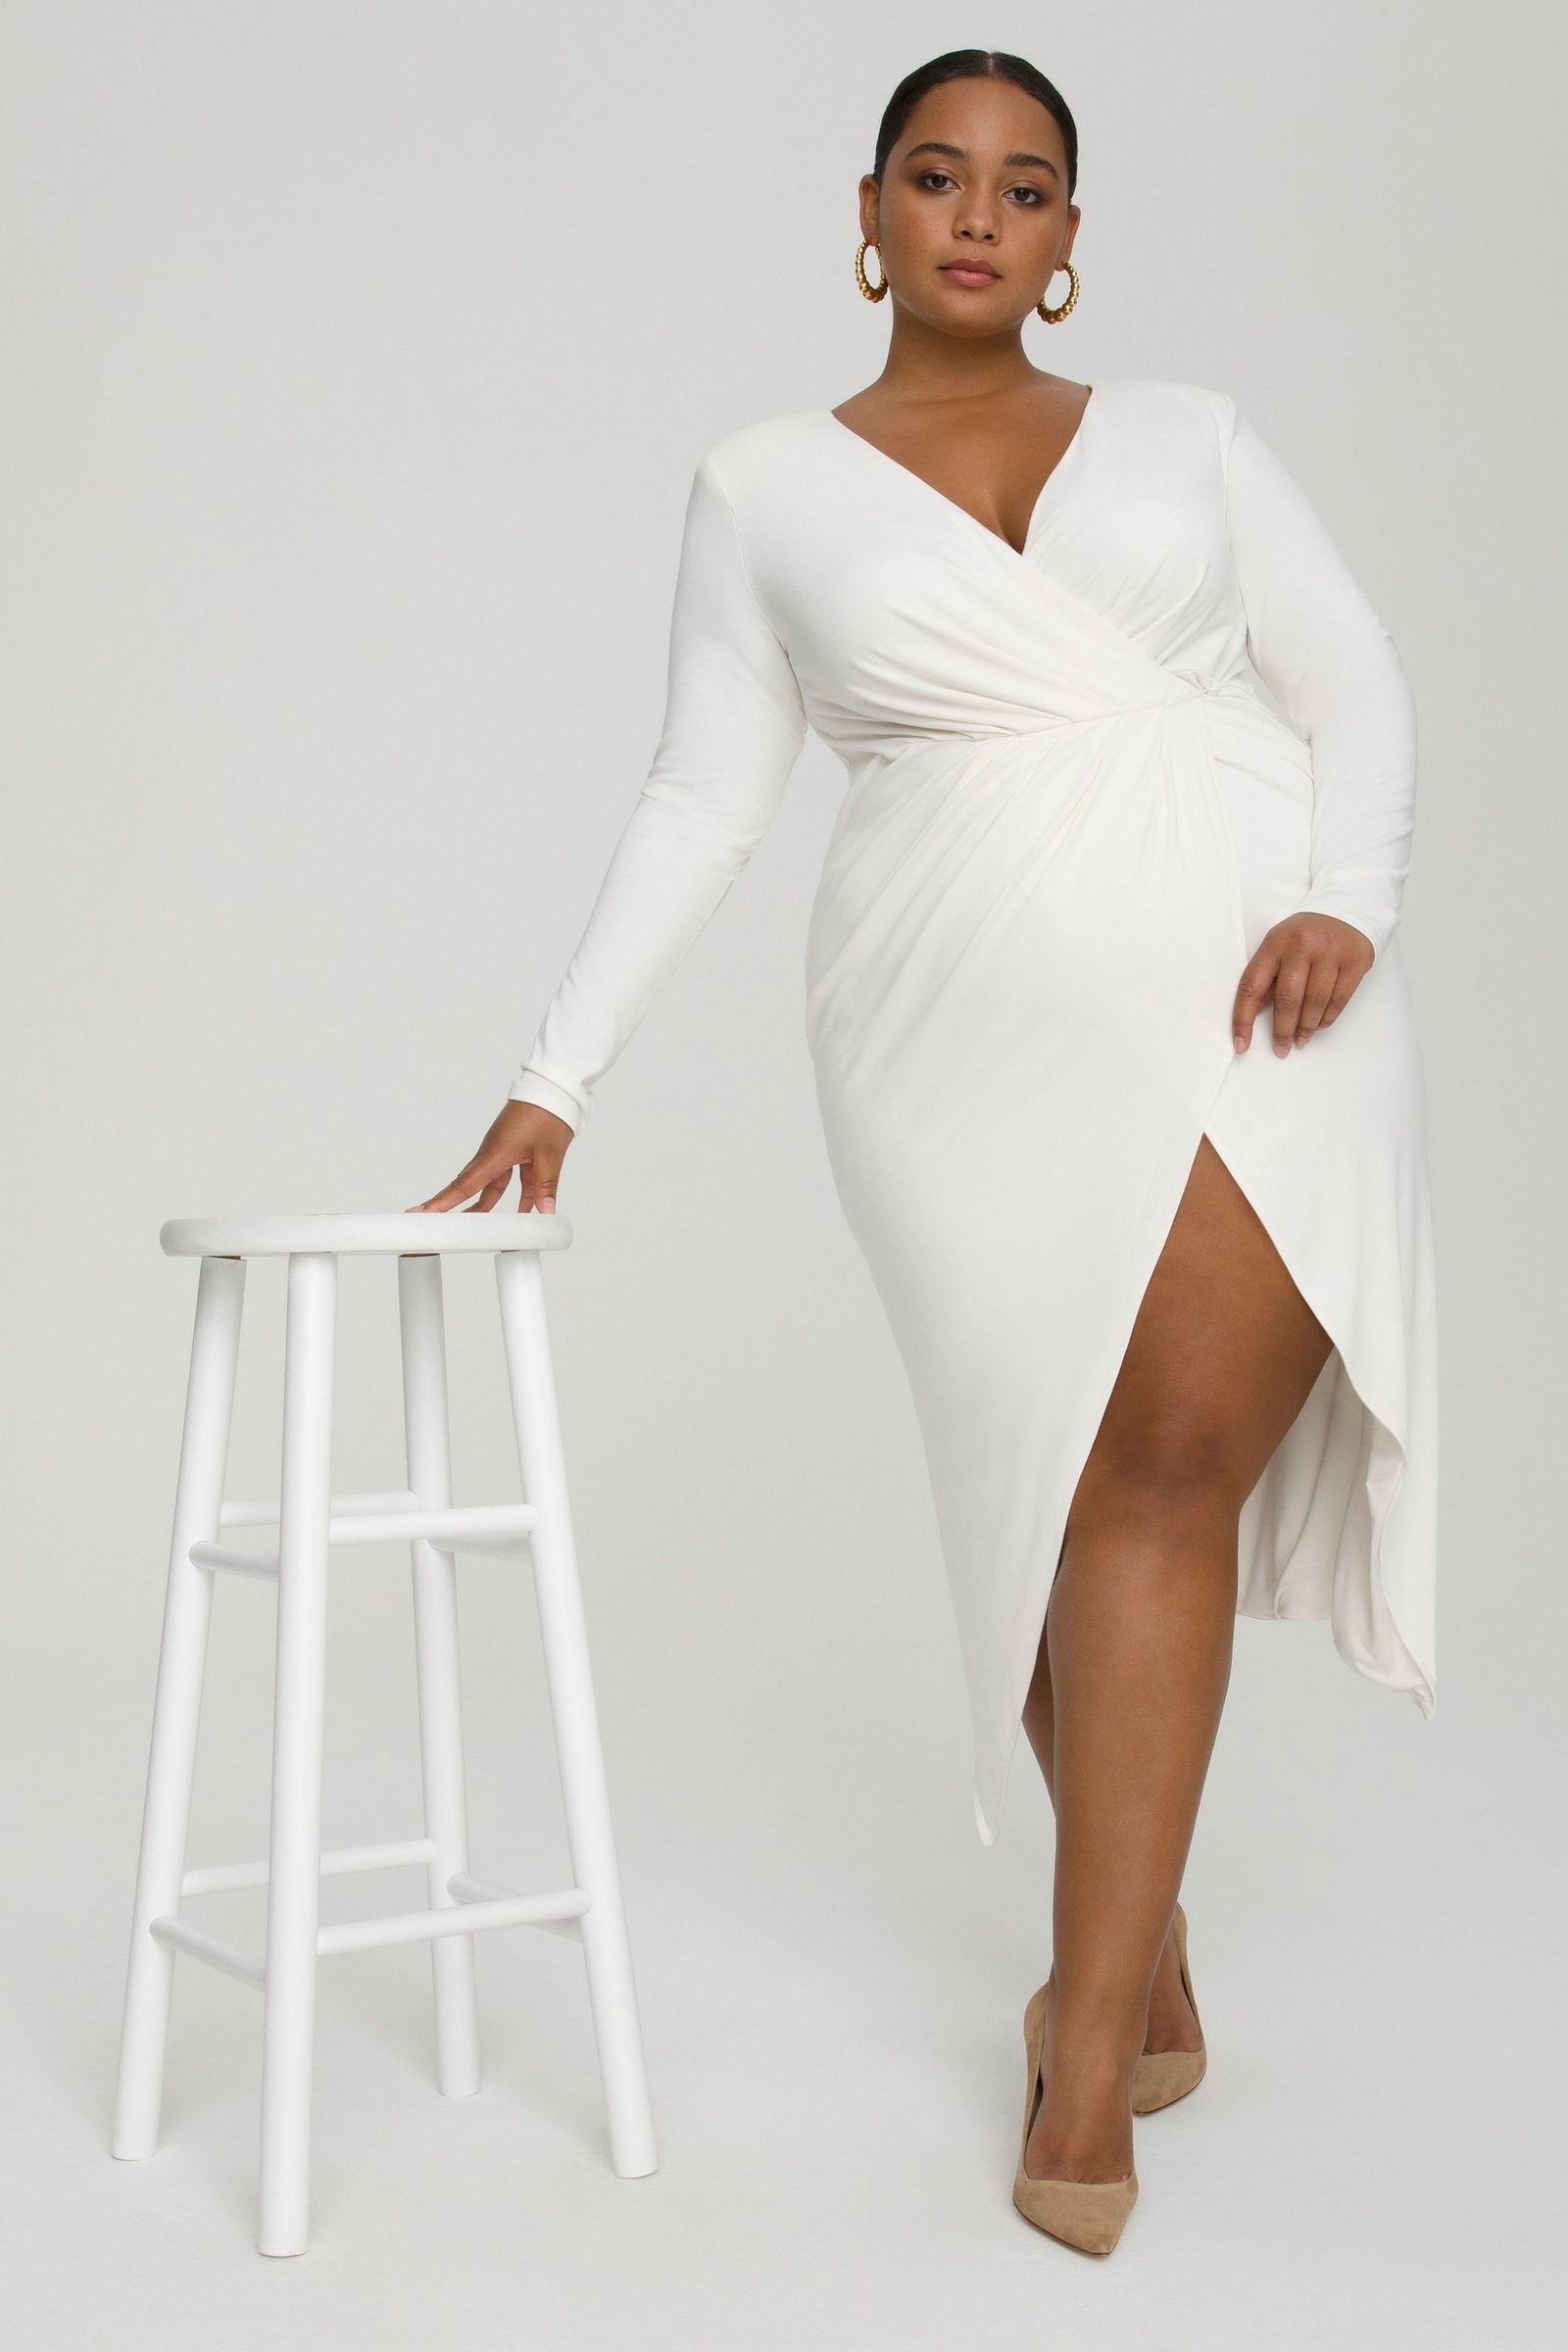 model wearing the white wrap dress